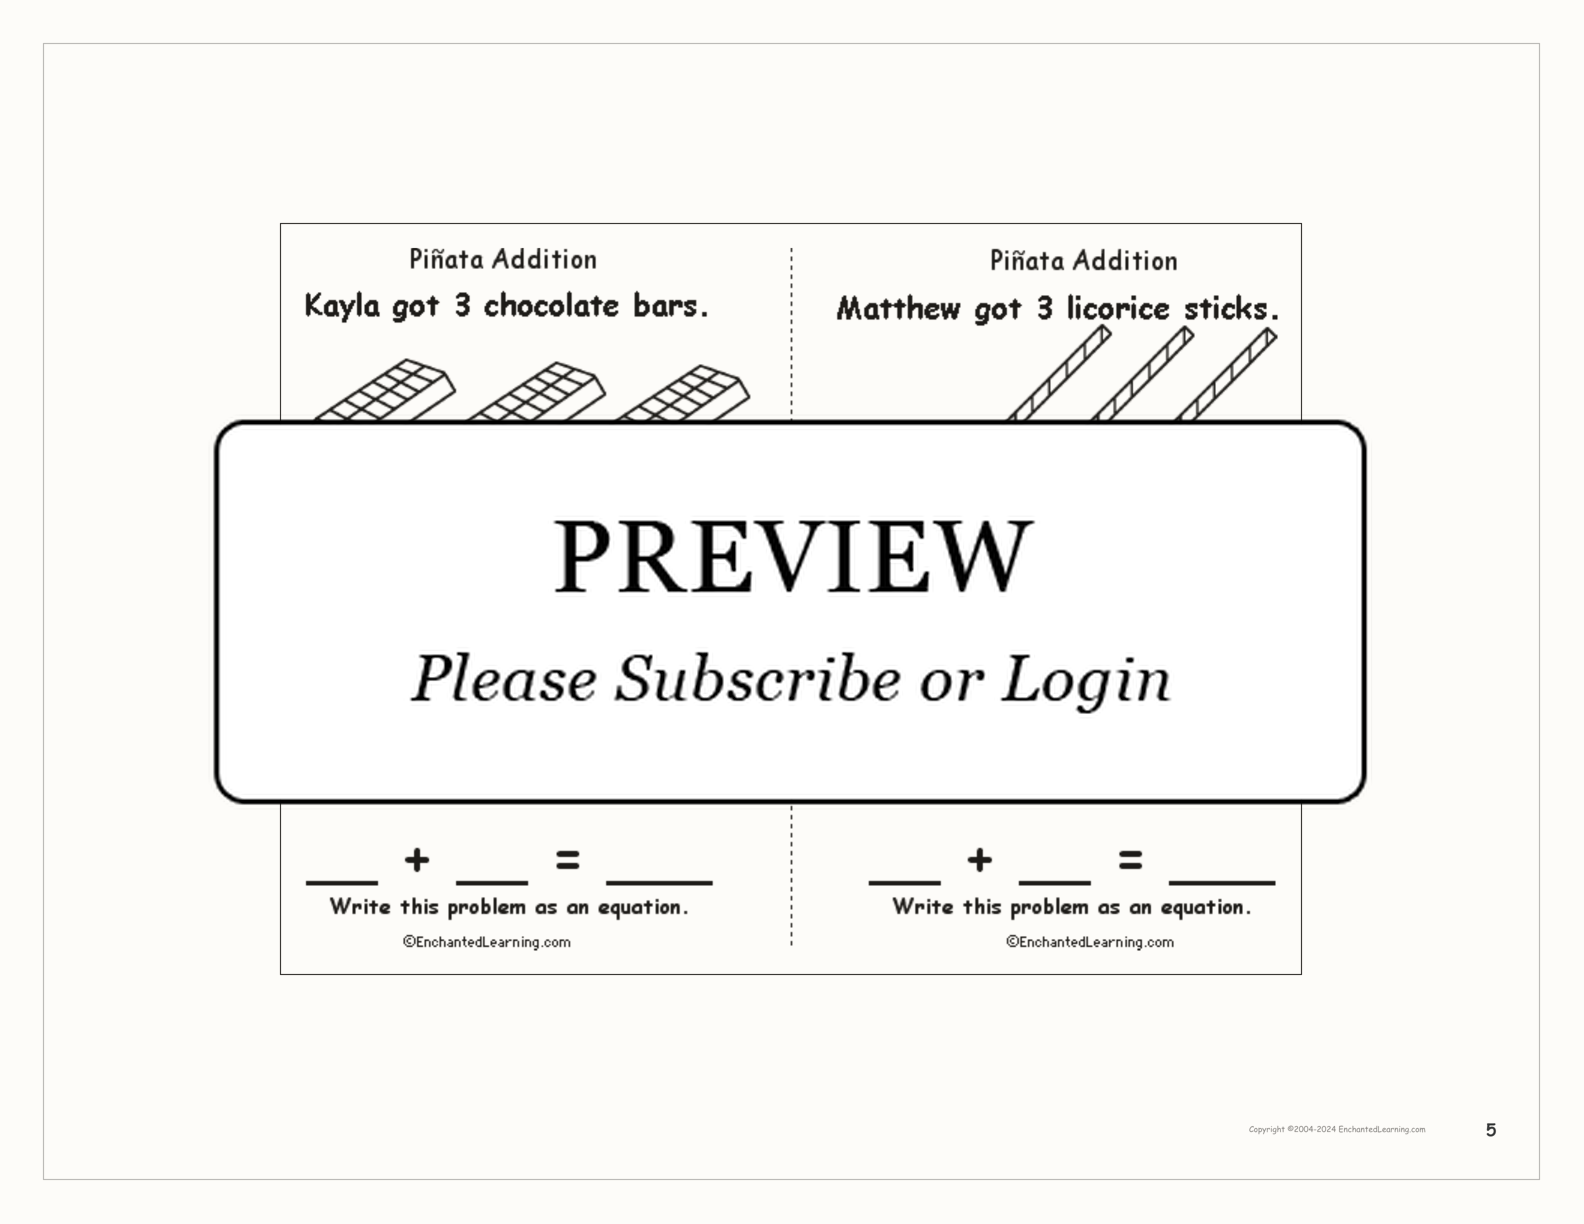 Piñata Addition: A Printable Book interactive printout page 5